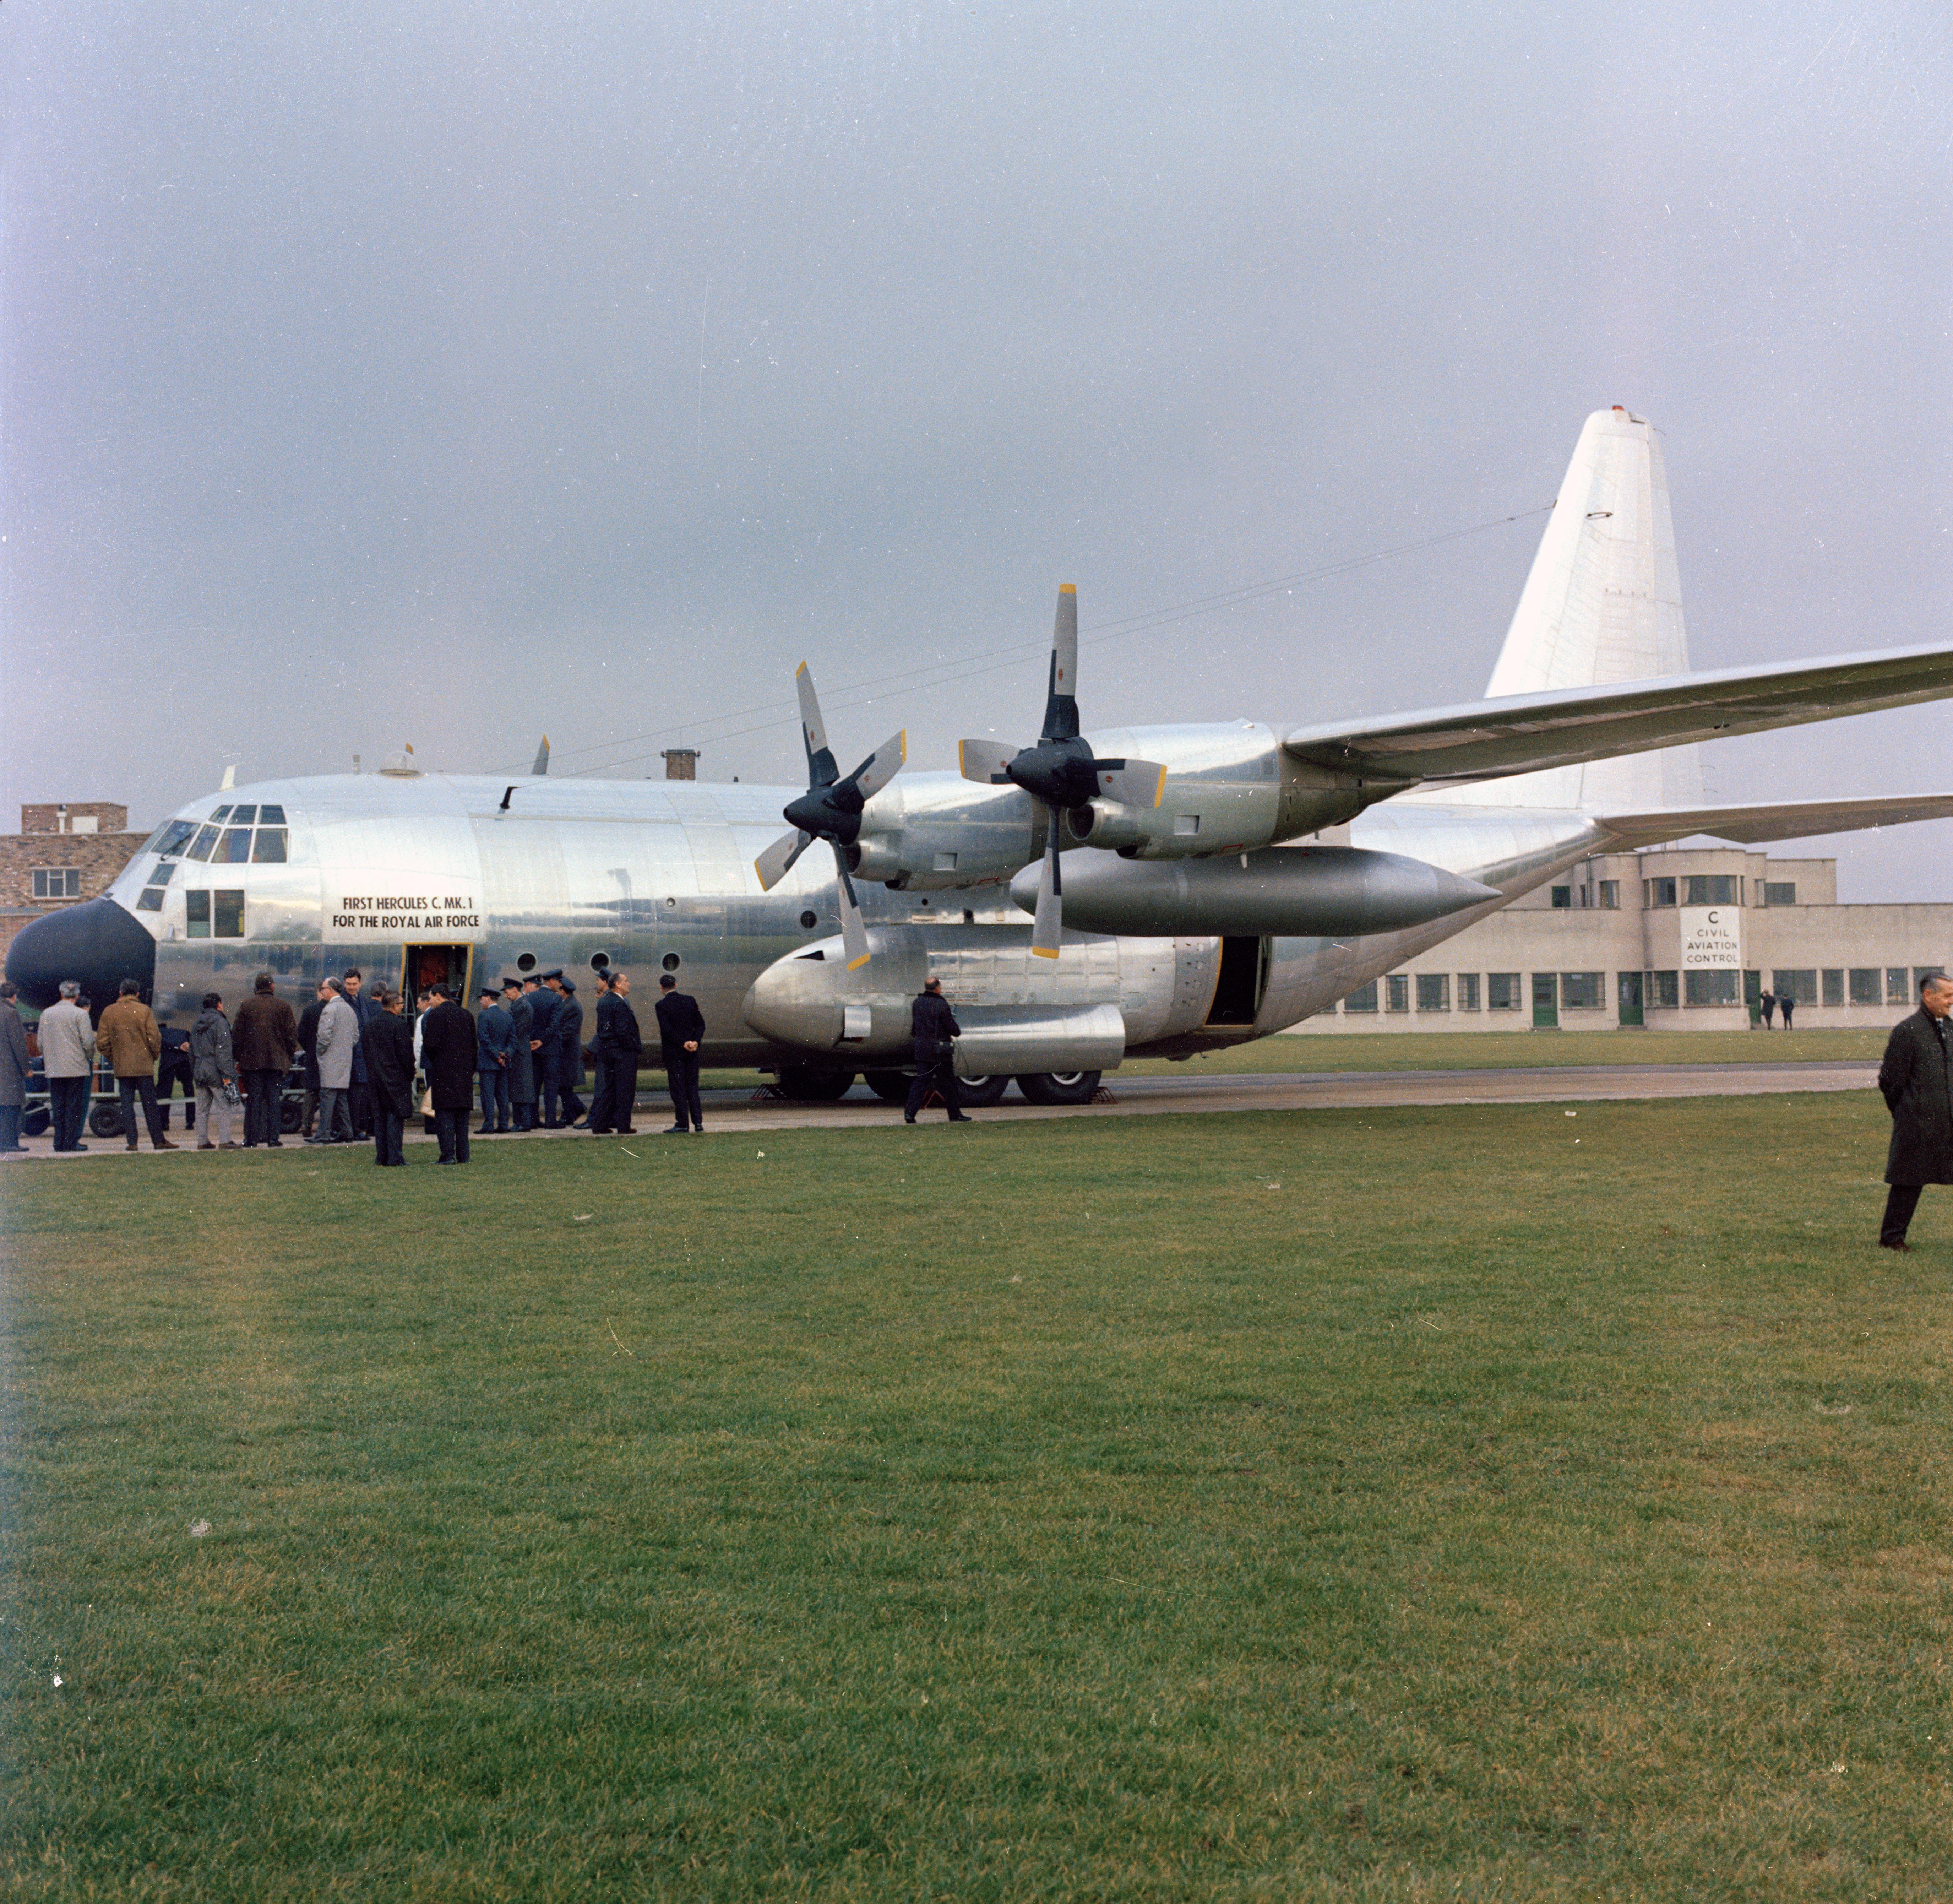 The first RAF Hercules